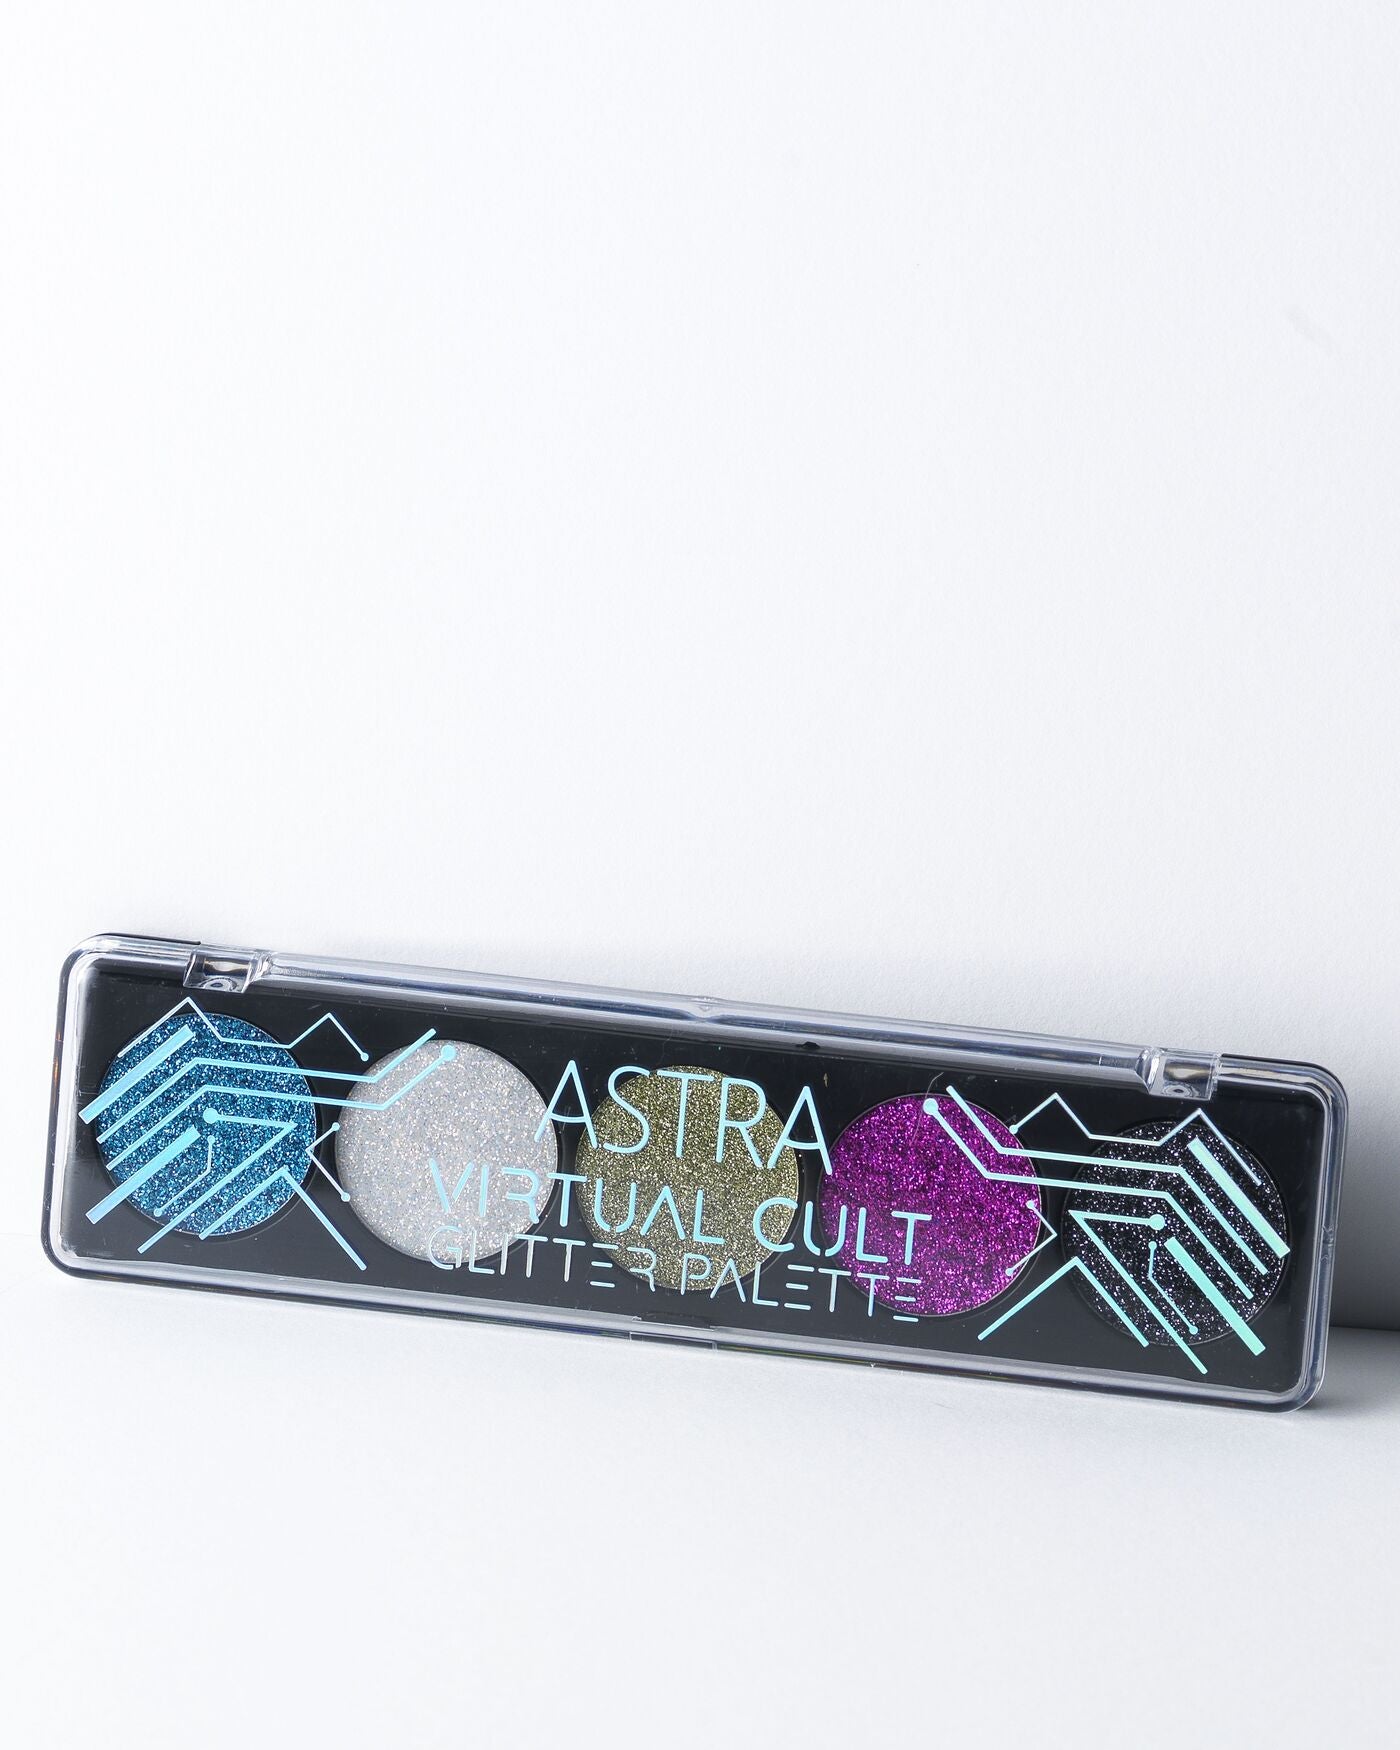 VIRTUAL CULT - Palette Occhi Glitter - 04 - Tokyo Paradigm - Astra Make-Up